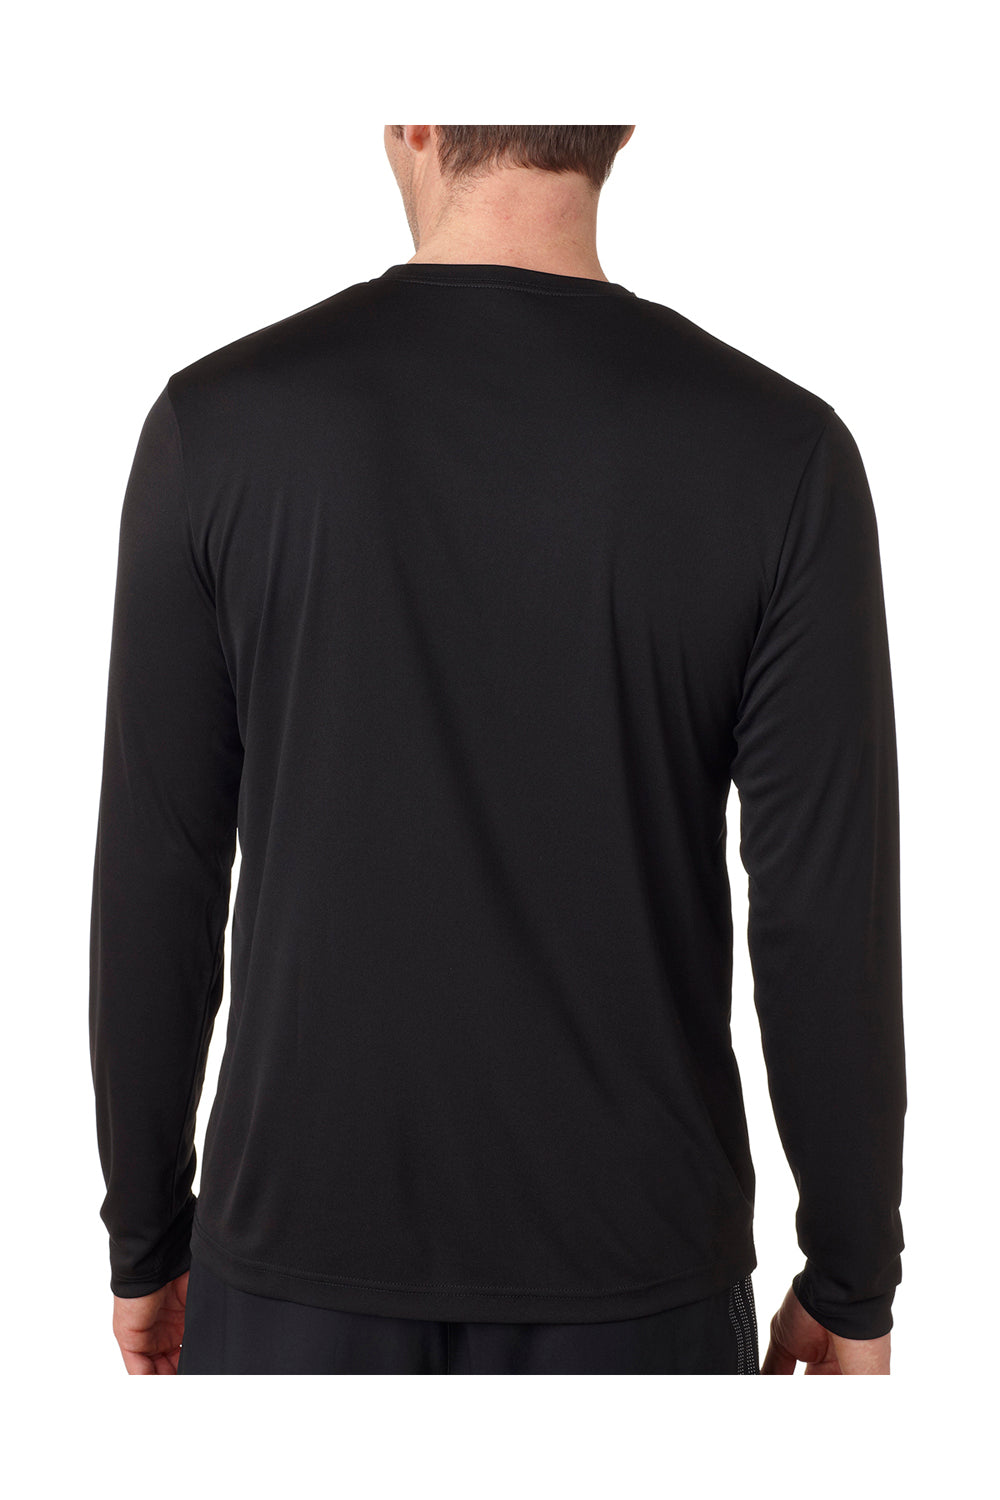 Hanes 482L Mens Cool DRI FreshIQ Moisture Wicking Long Sleeve Crewneck T-Shirt Black Back